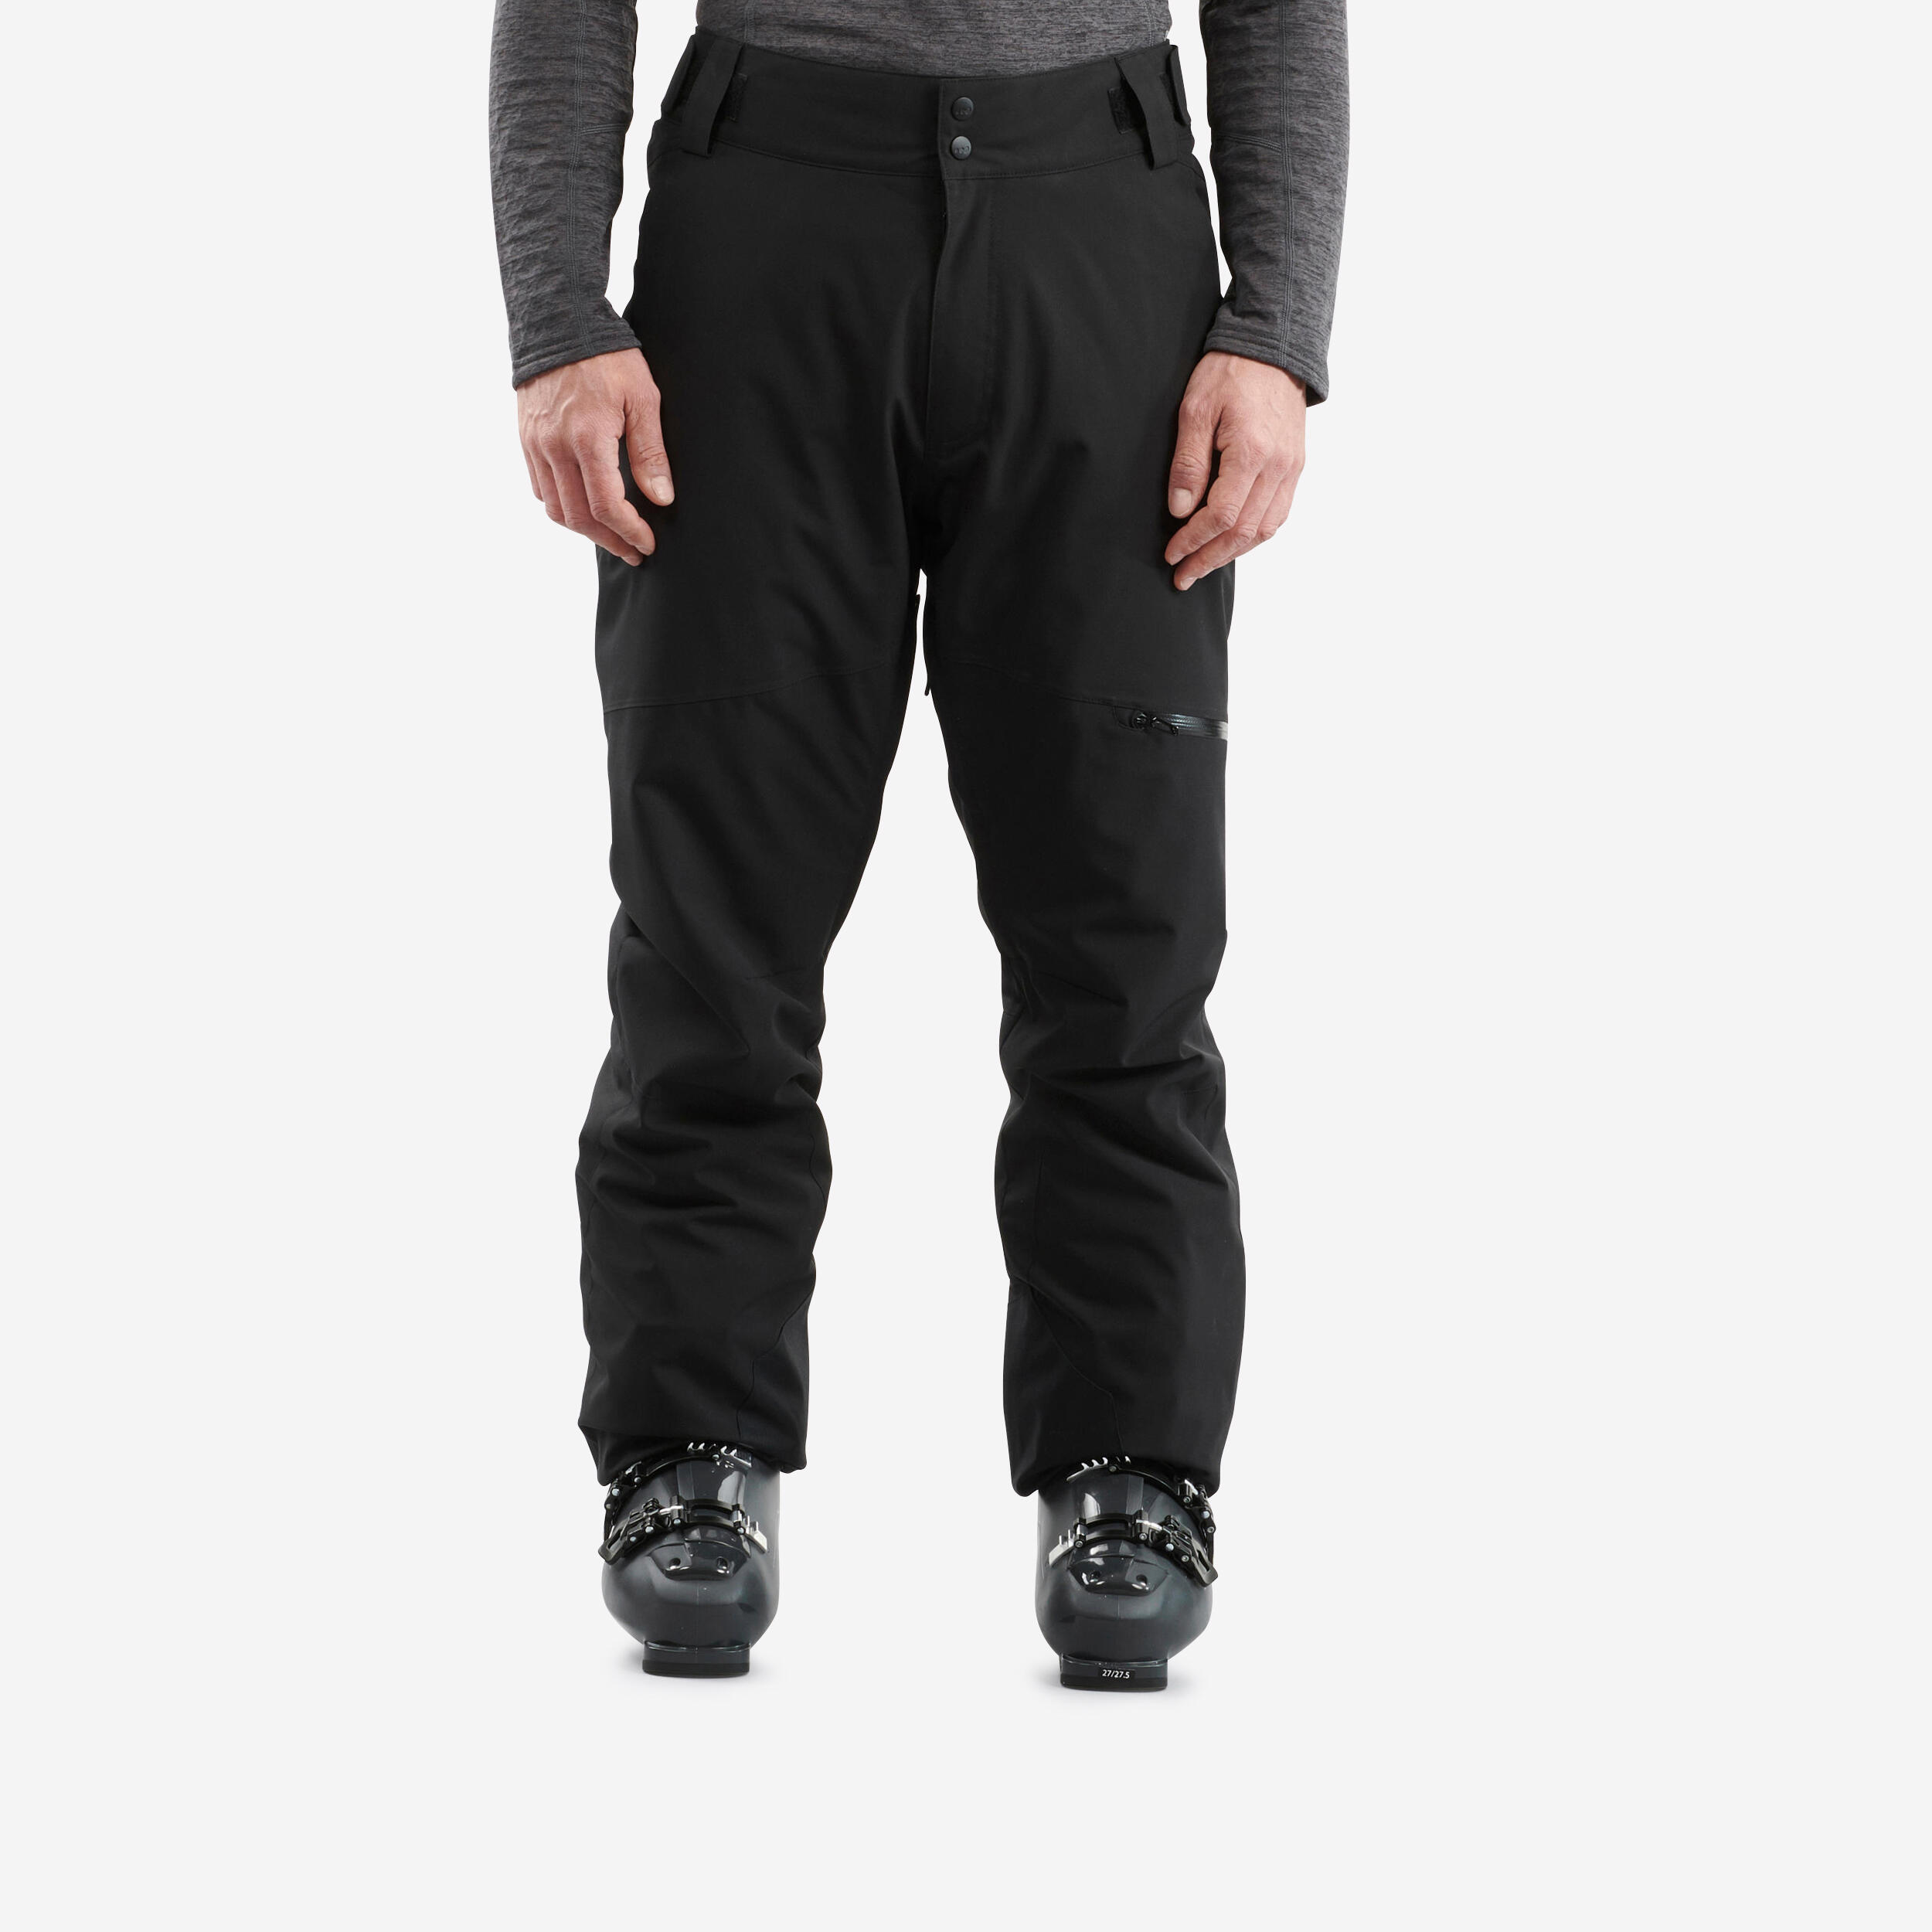 Men’s Warm Ski and Snowboarding Trousers Regular 500 - Black 1/9